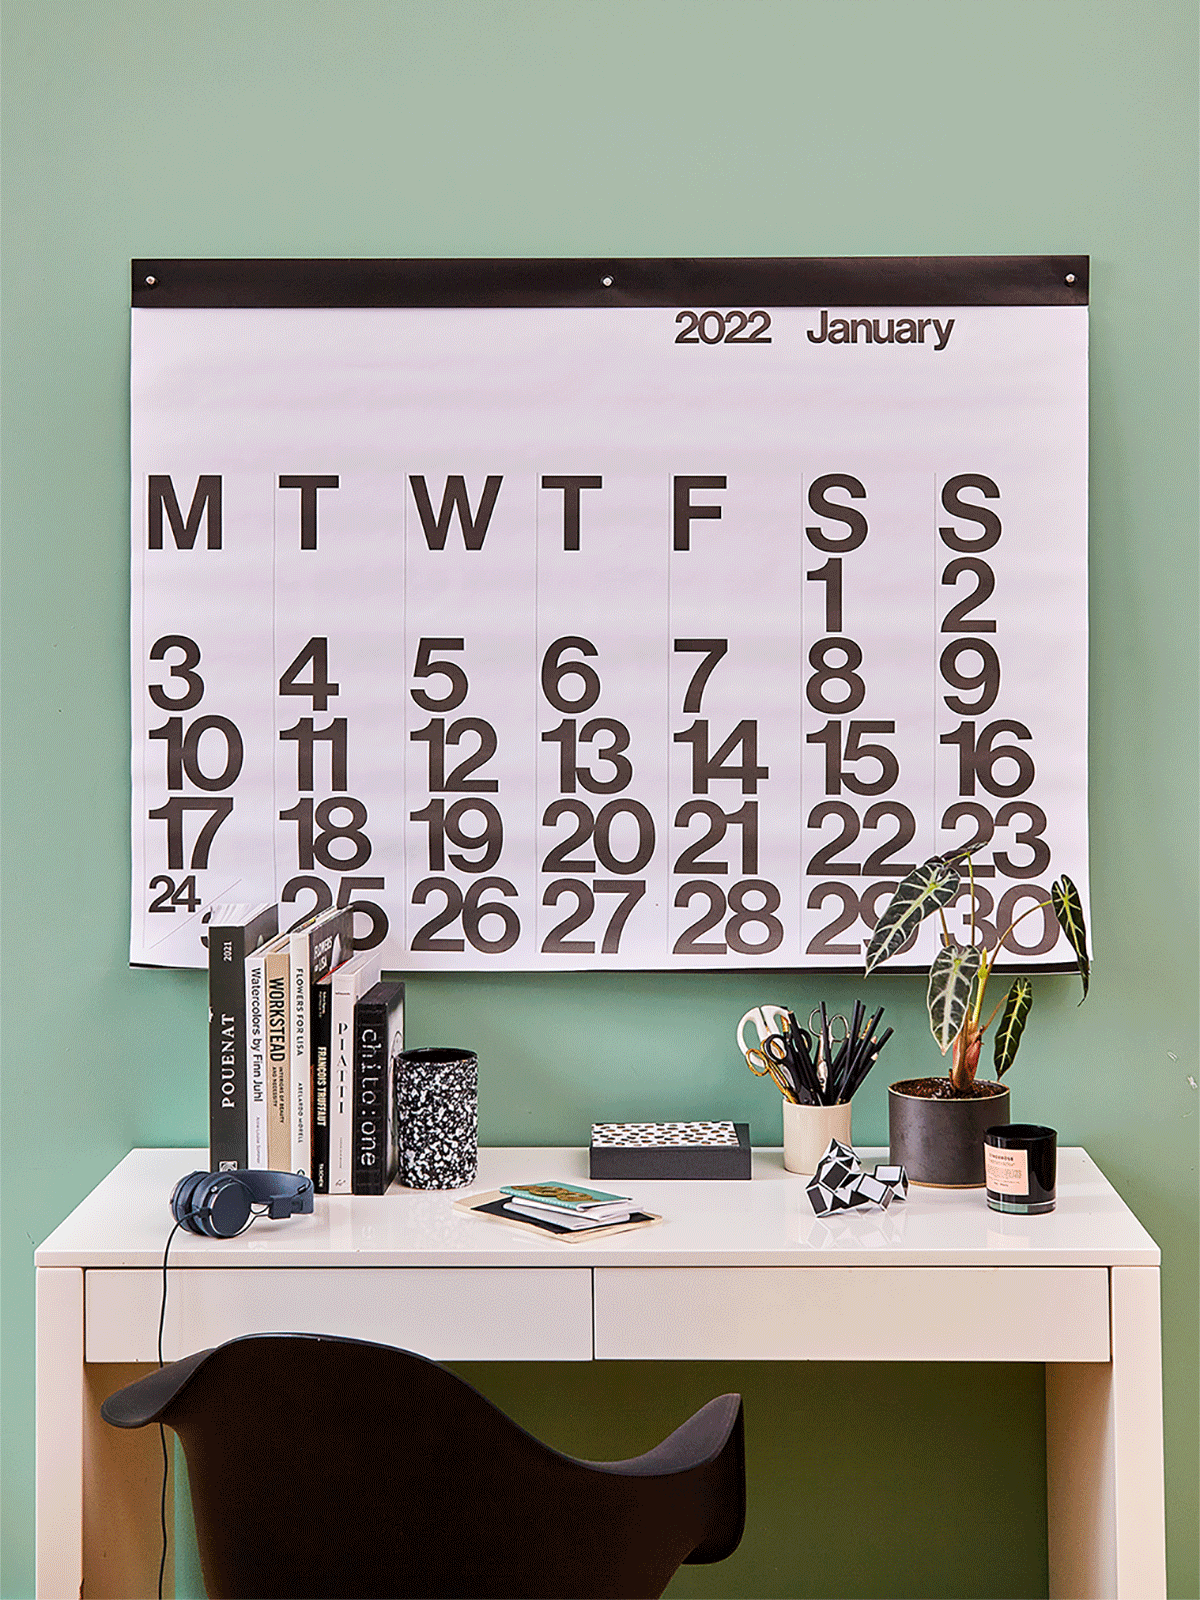 animated image of a wall calendar